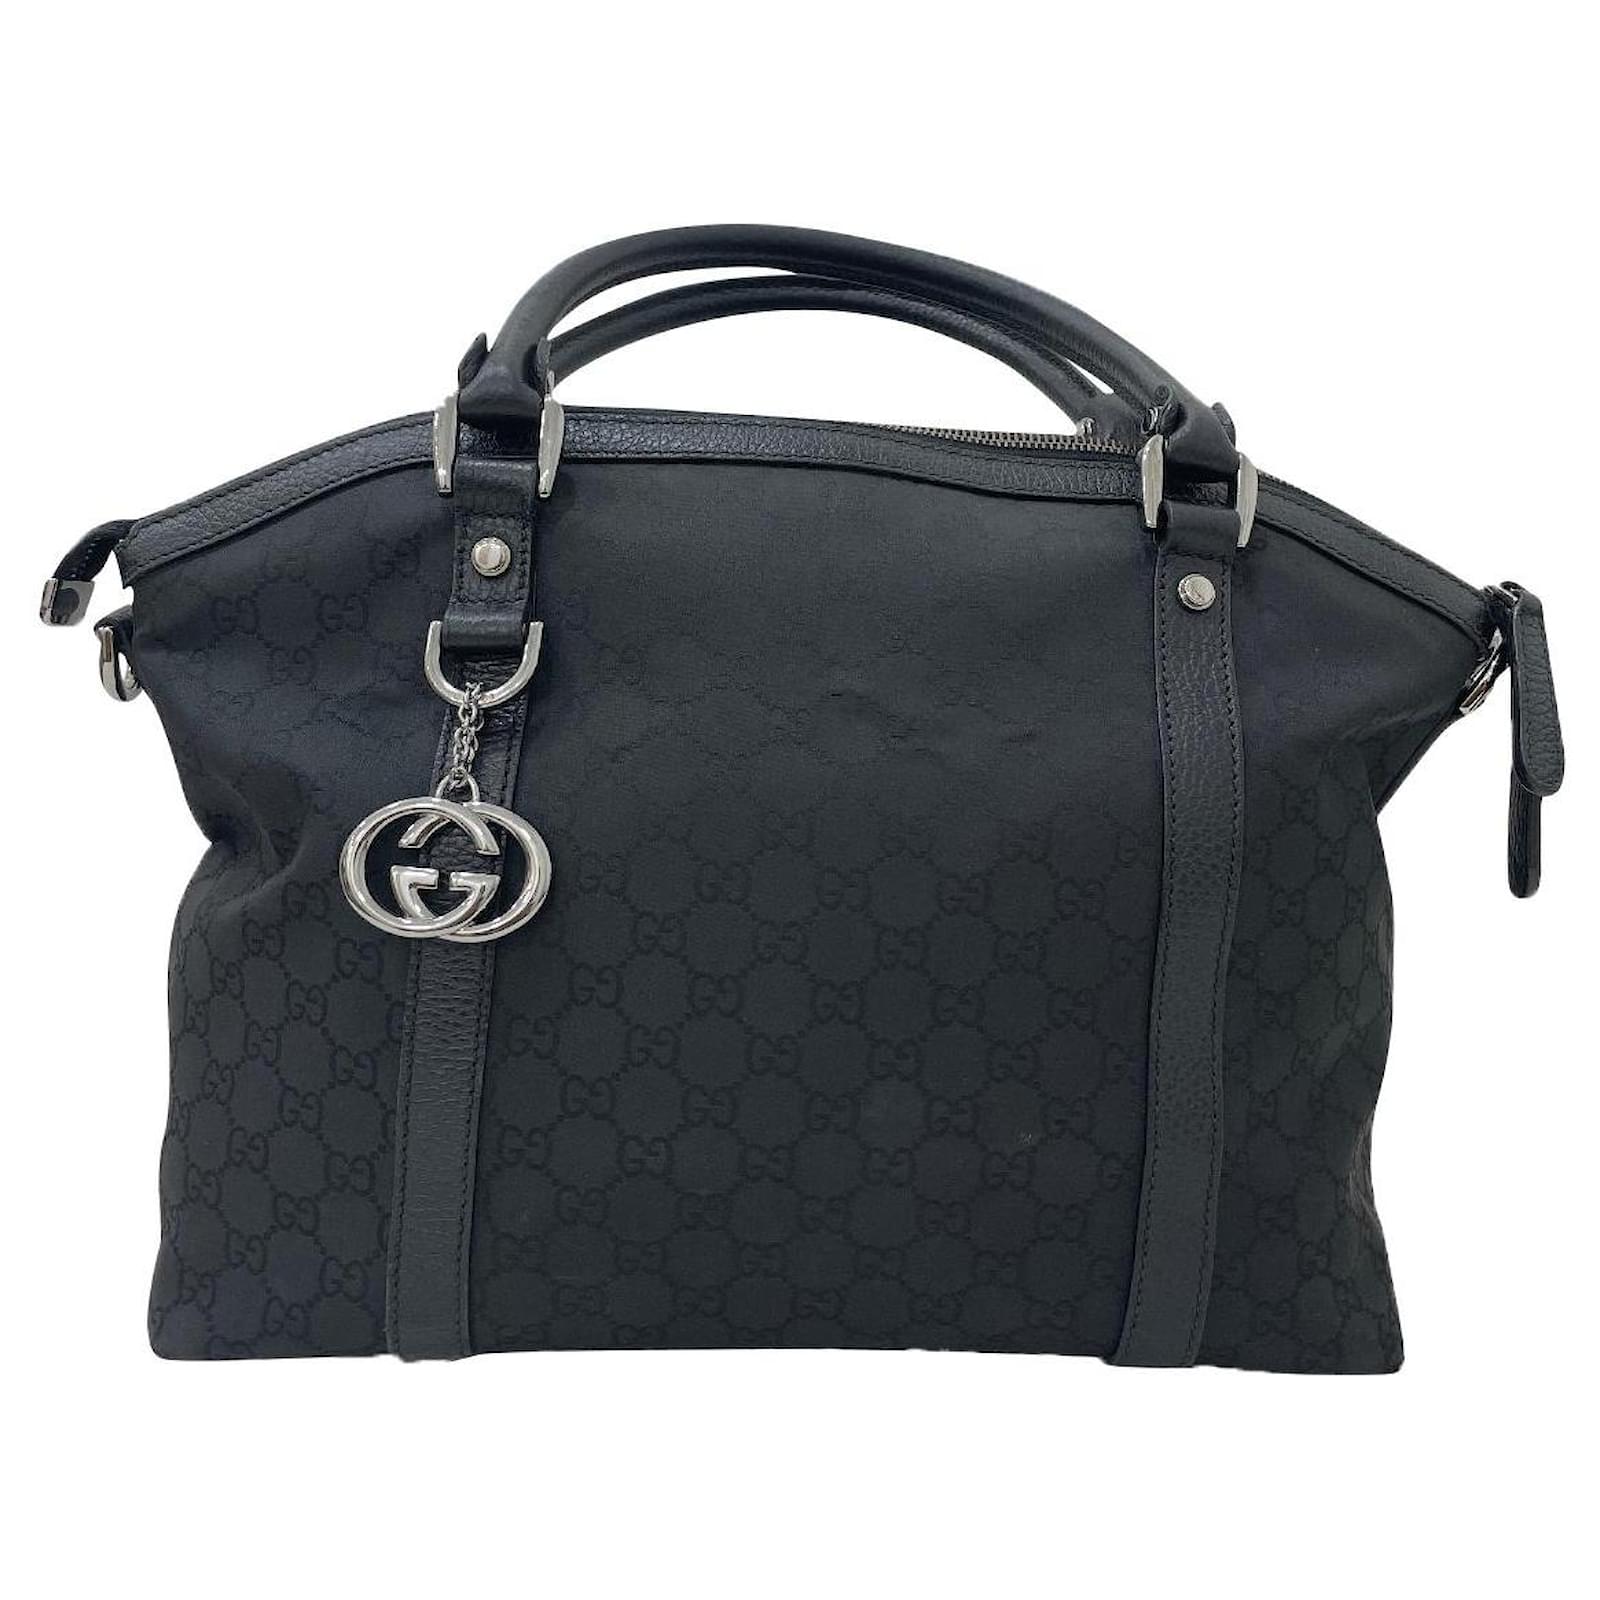 Gucci GG Guccissima Dome Satchel Shoulder Bag In Black